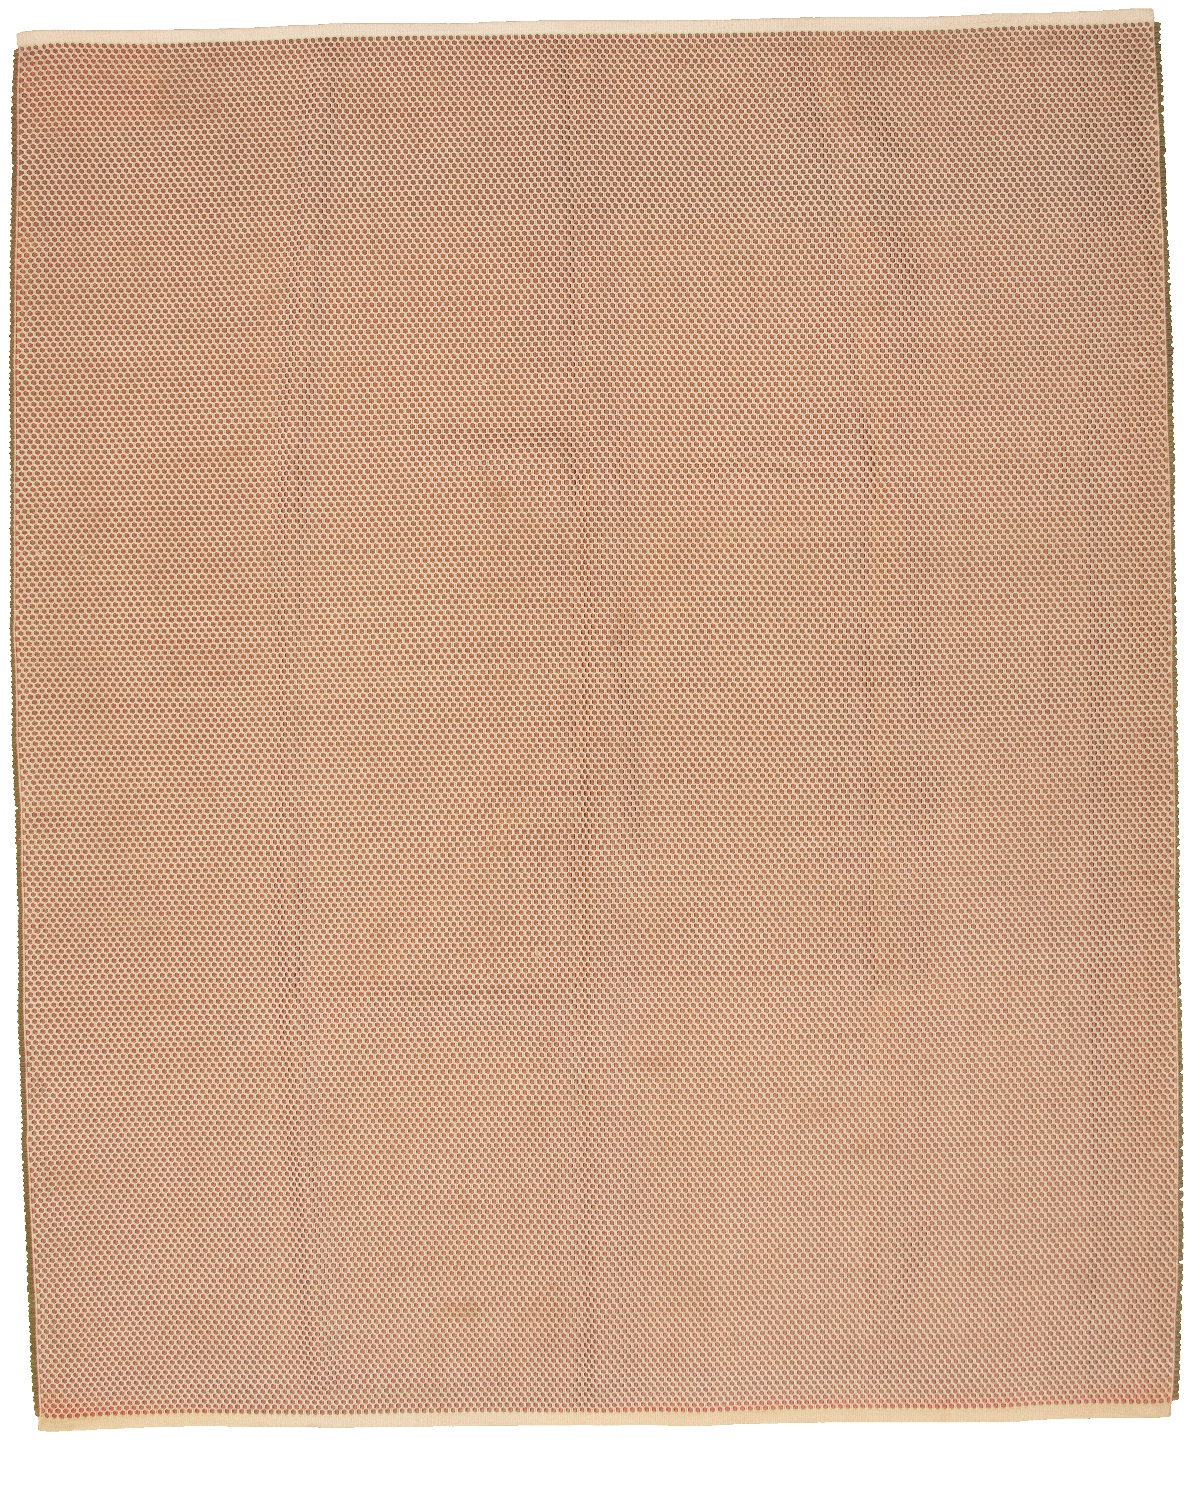 Handmade Honeycomb III Dark Copper Cotton/Polyester Rug 6'6" x 8'4" Size: 6'6" x 8'4"  